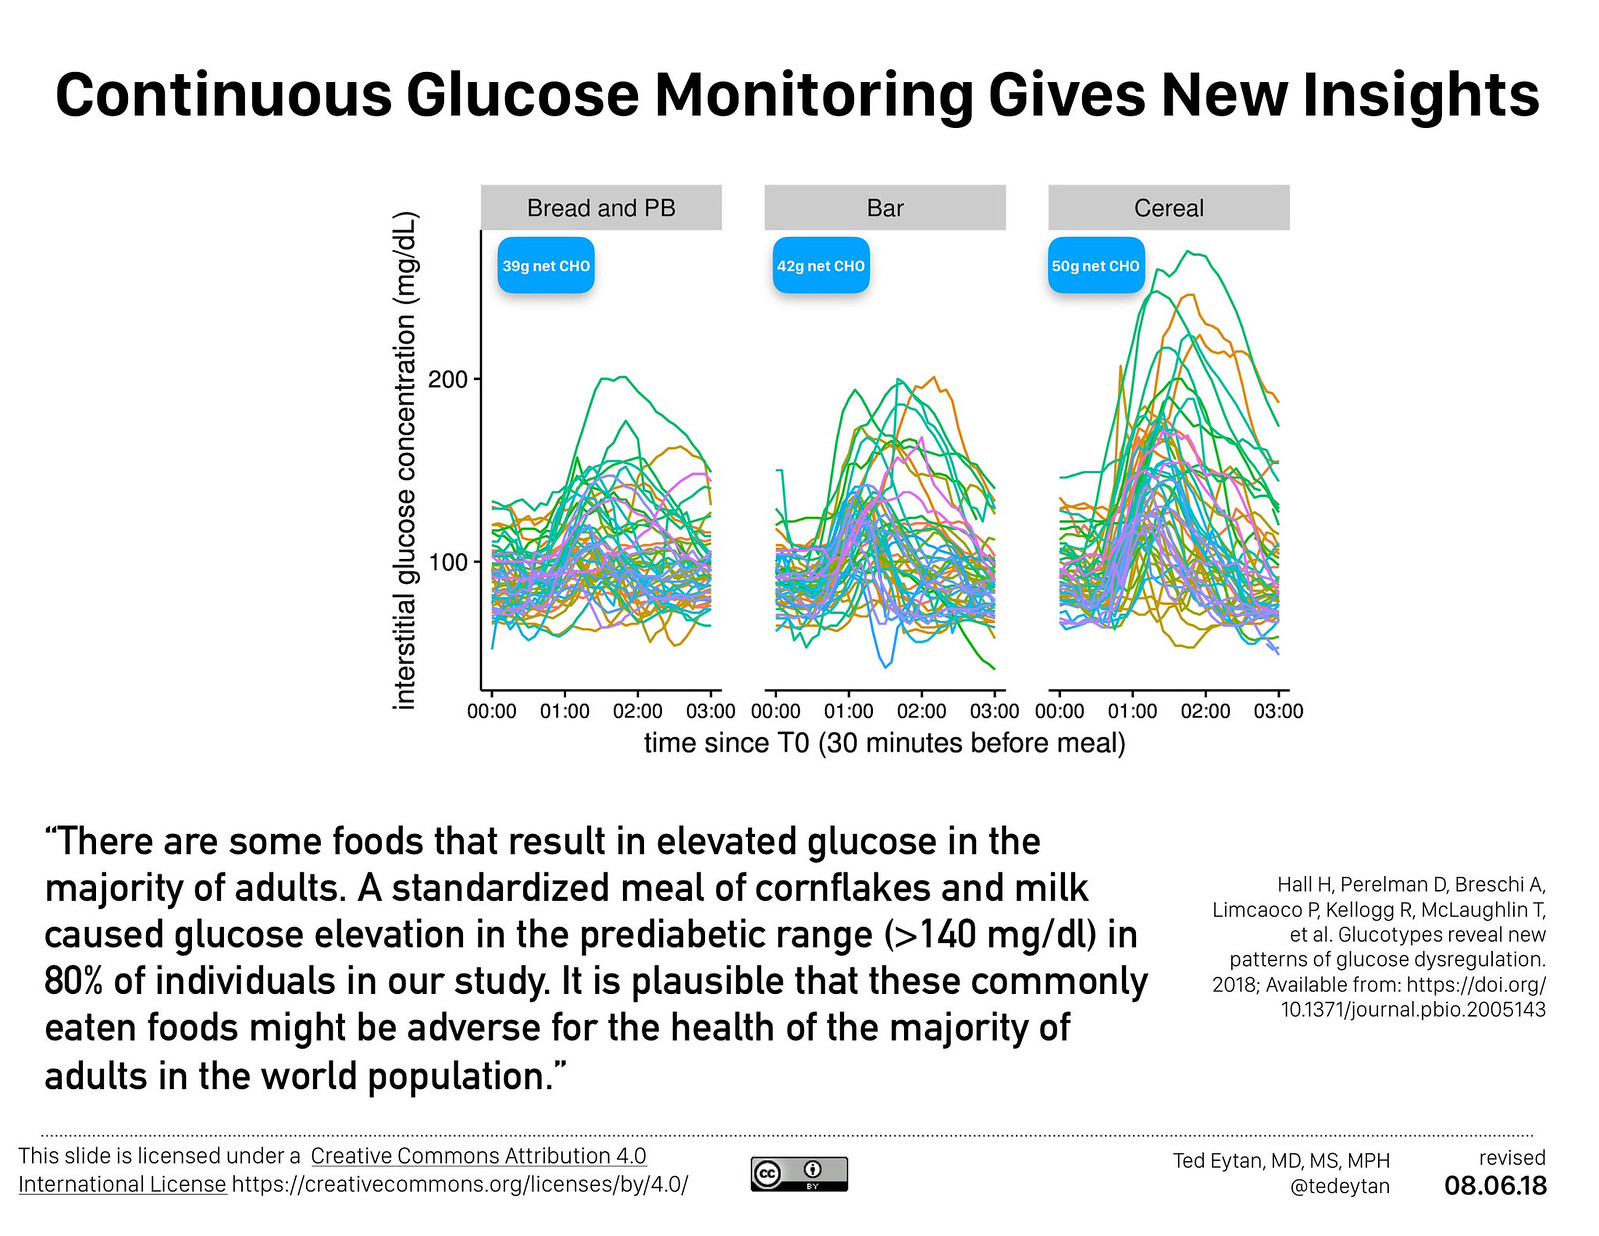 2018.08.06 Glucotypes reveal new patterns of glucose dysregulation 509